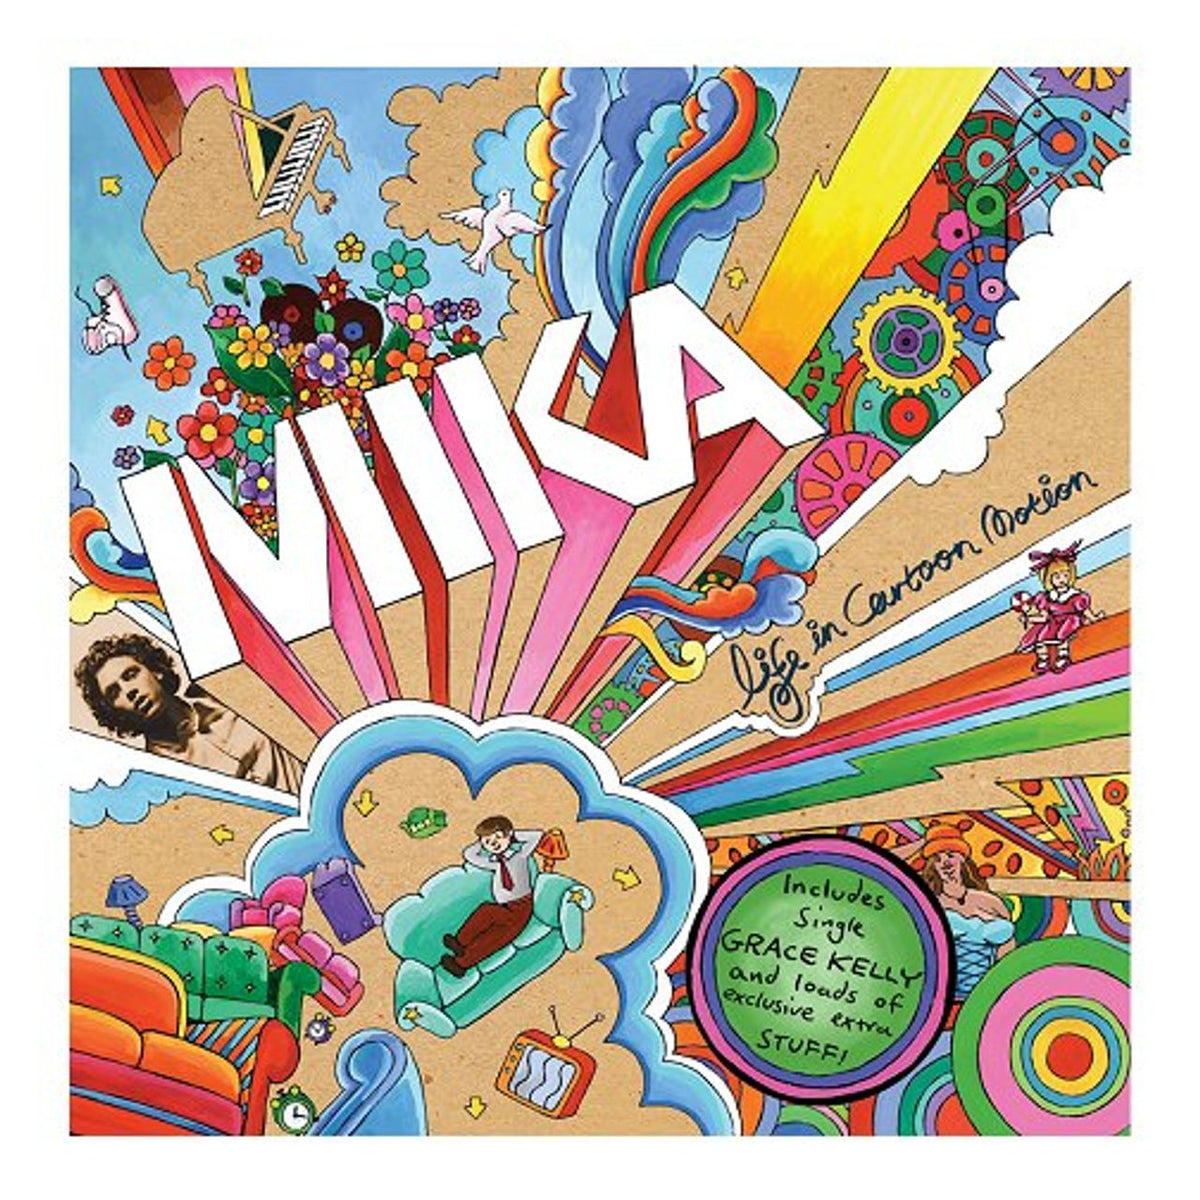  MIKA Life In Cartoon Motion BPI Platinum Album Award –